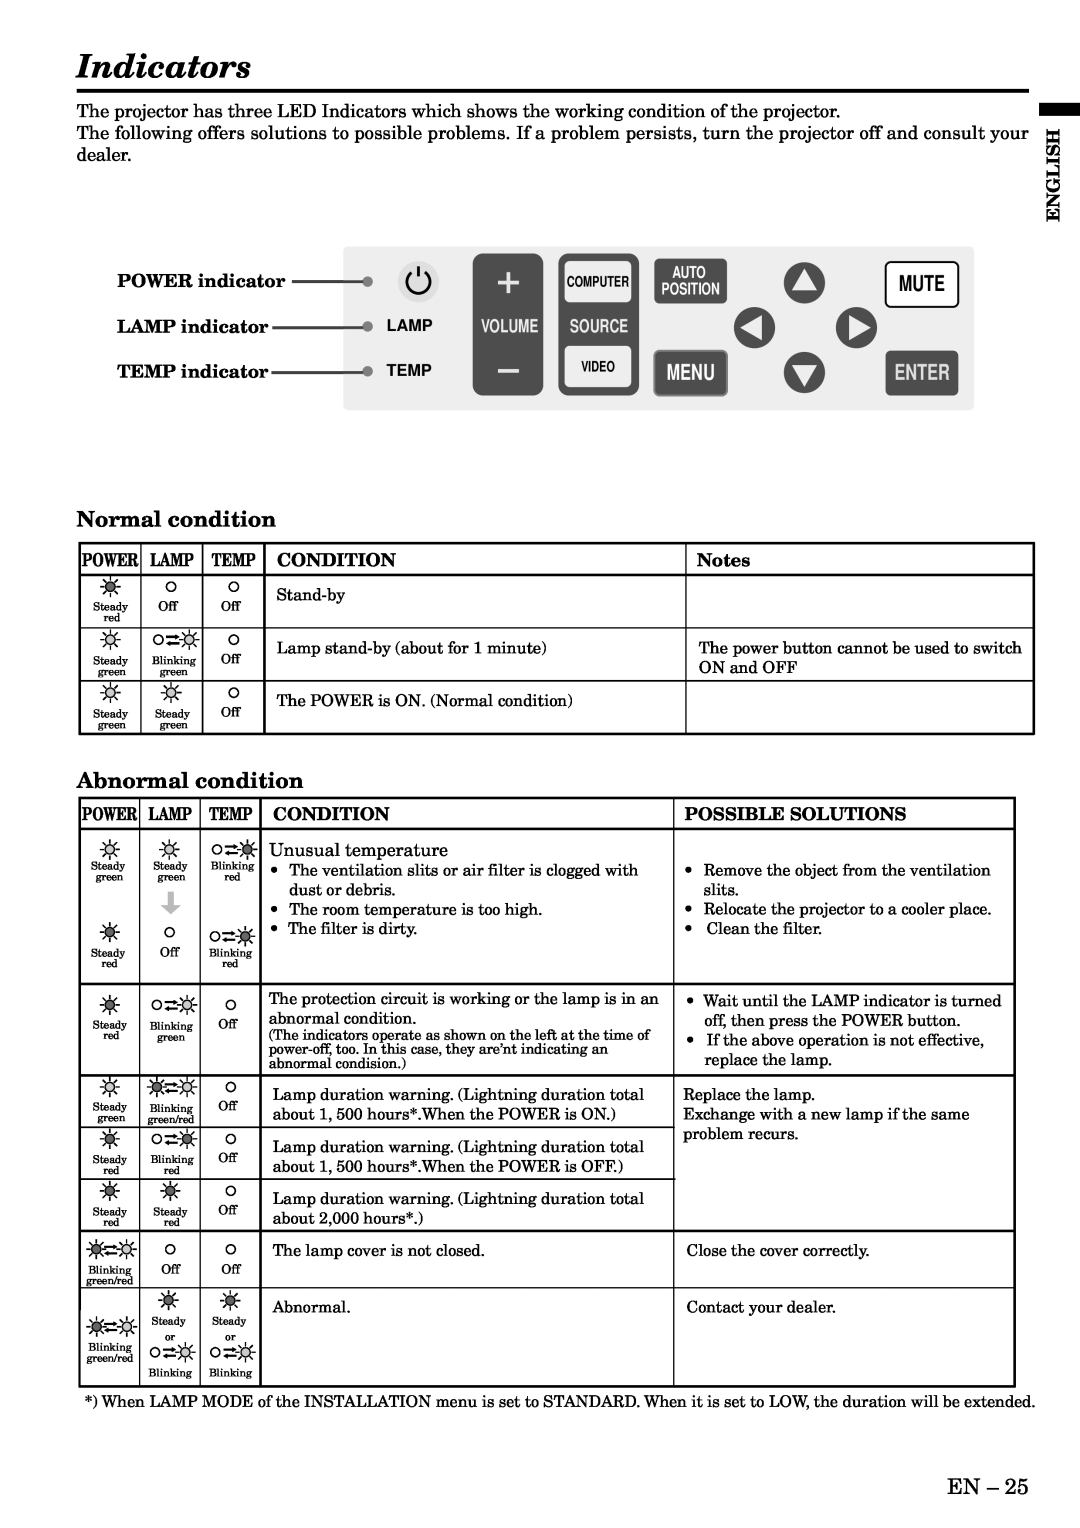 Mitsubishi Electronics XL2U user manual Indicators, Normal condition, Abnormal condition, Volume Source 